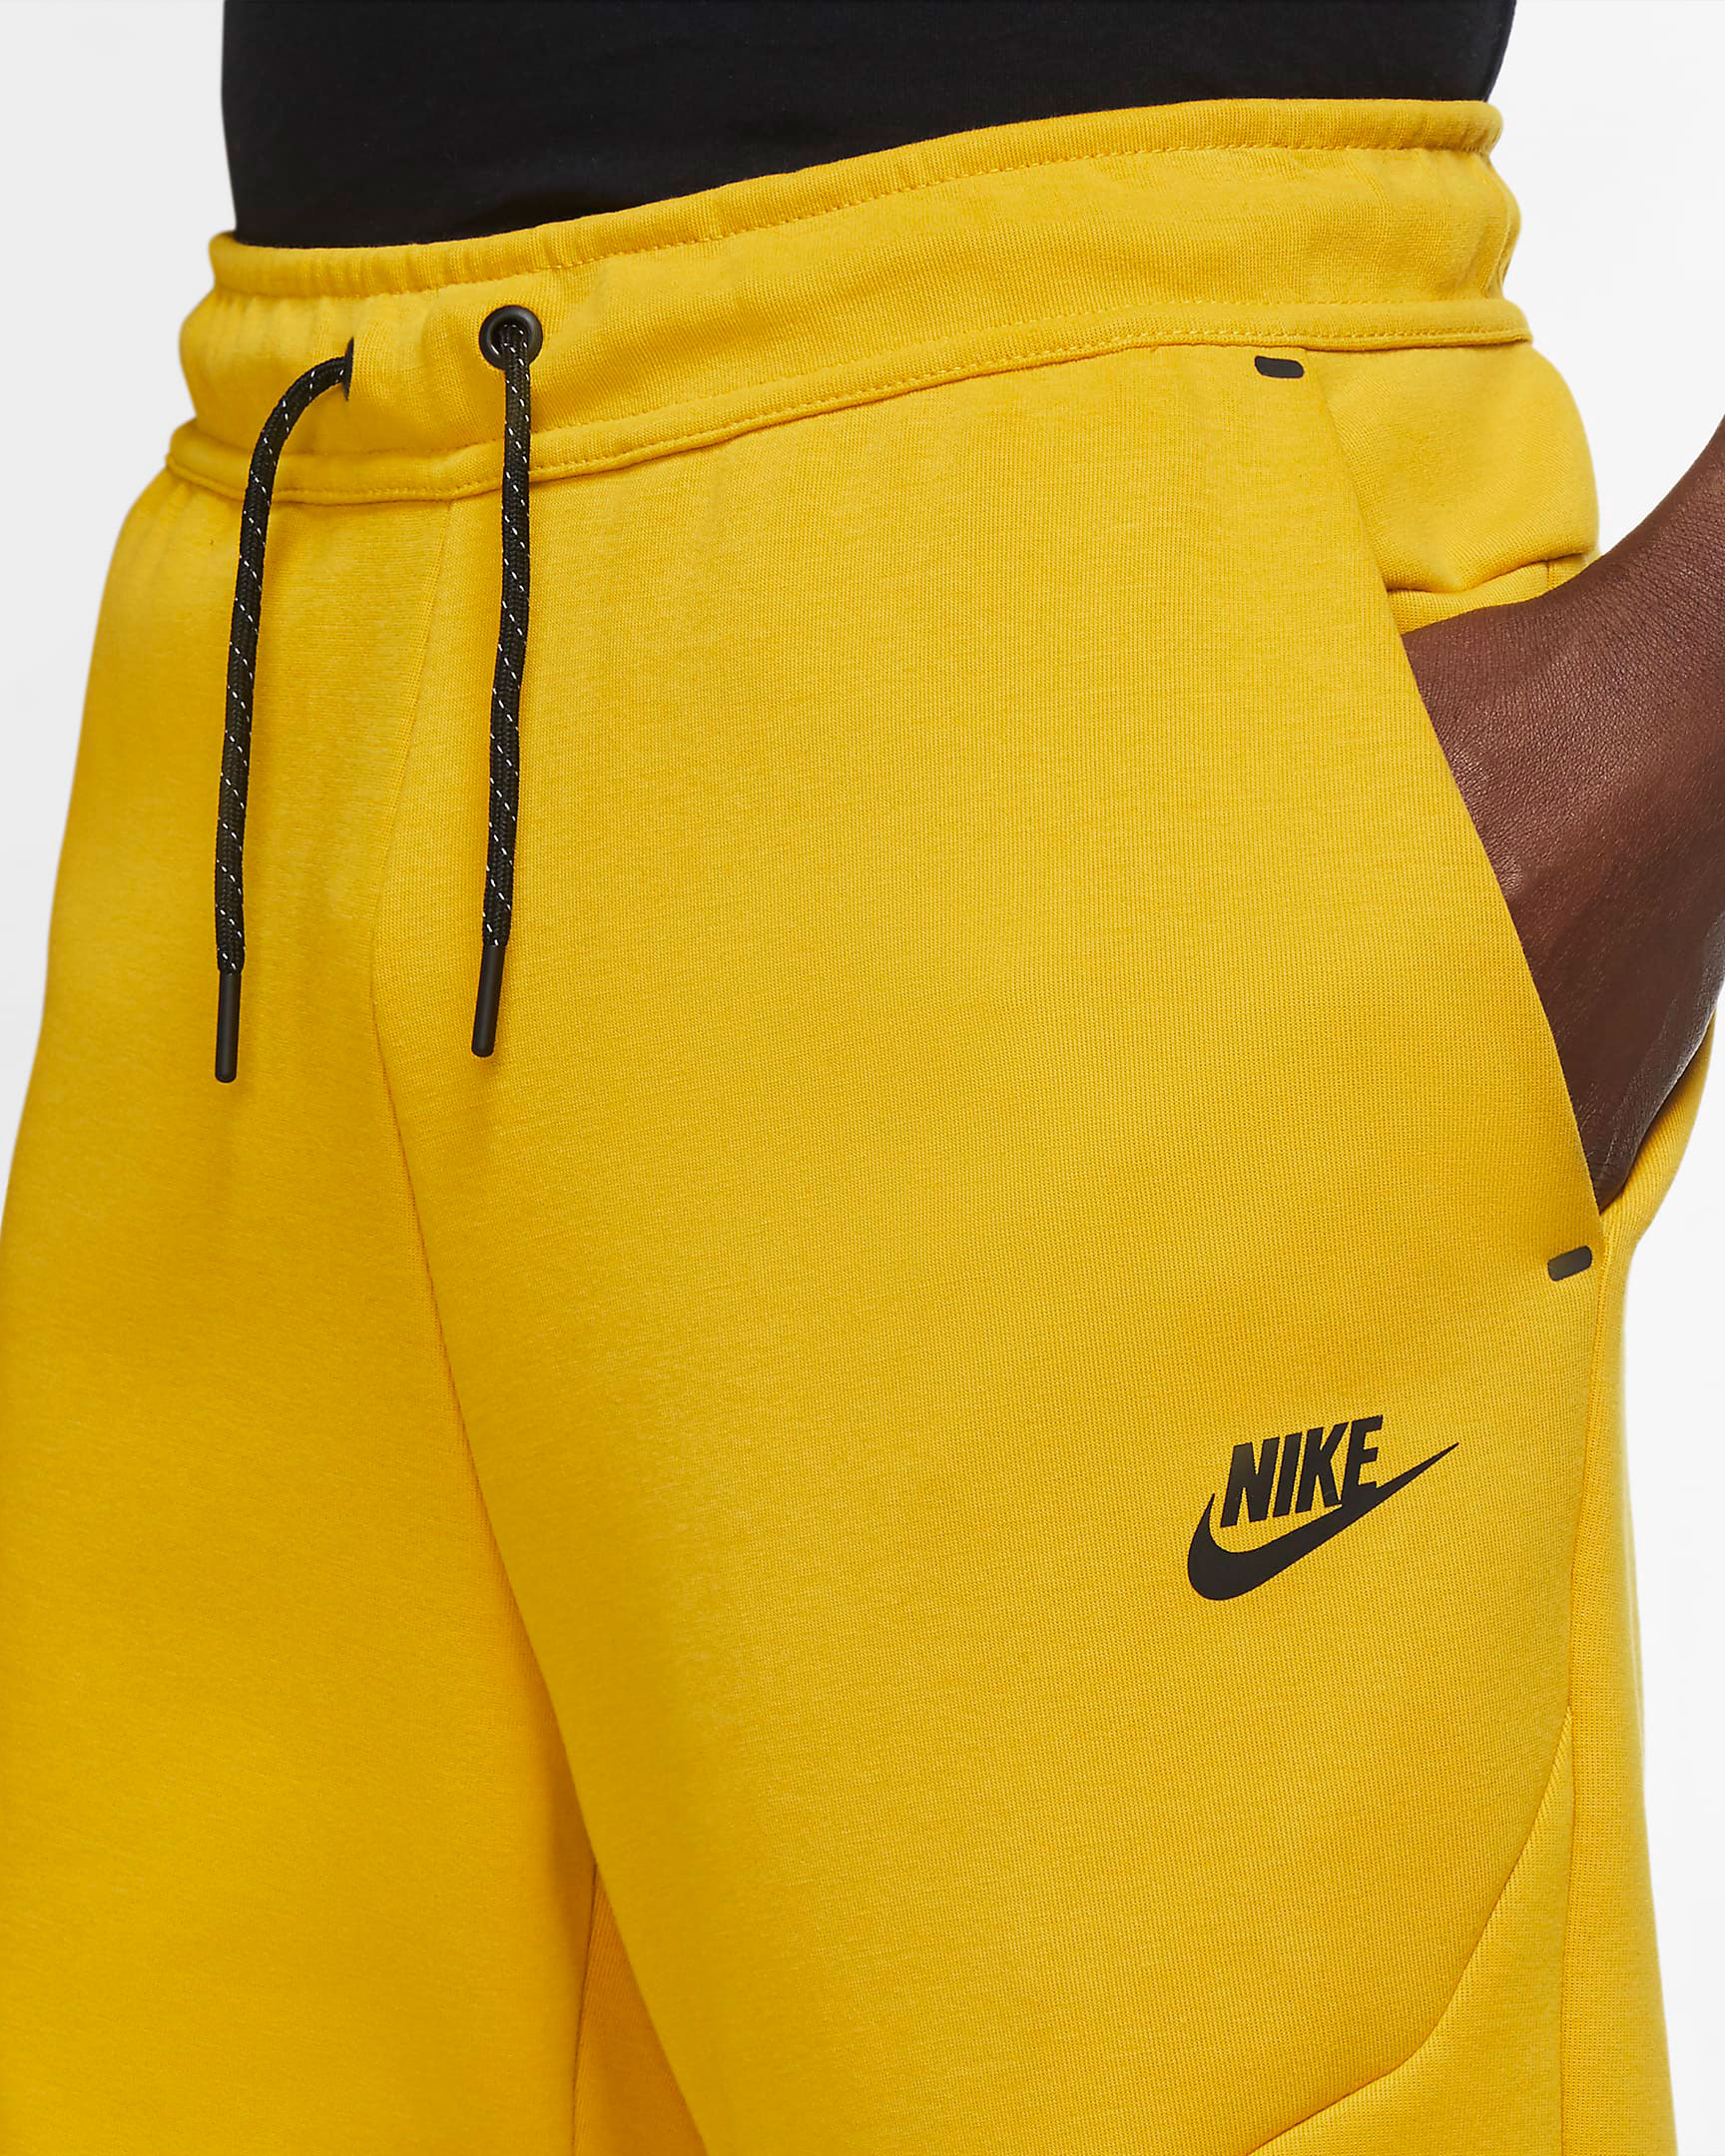 nike-dunk-high-varsity-maize-yellow-black-jogger-pants-2